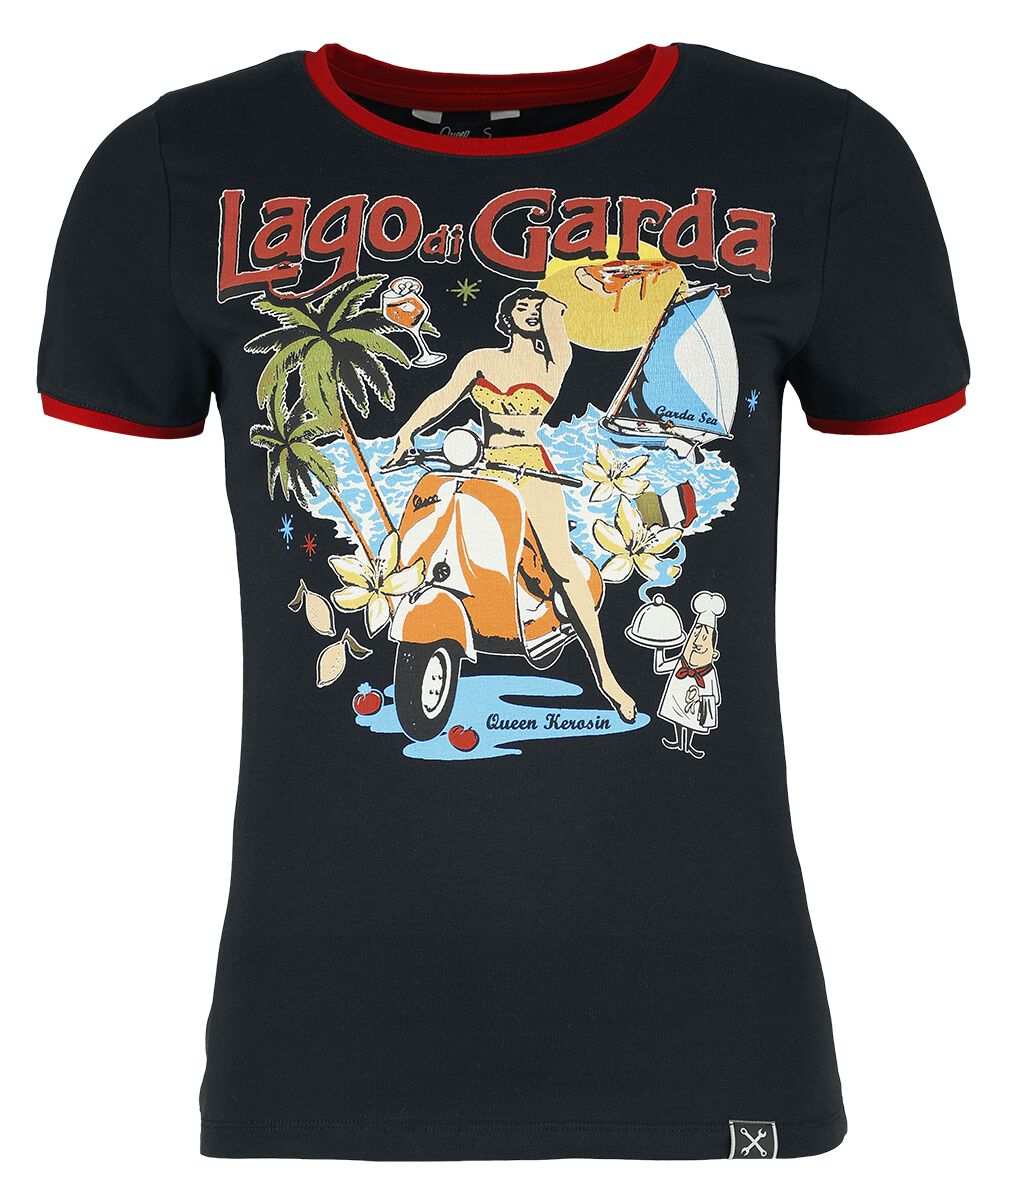 Queen Kerosin Lago Di Garda T-Shirt schwarz rot in 3XL